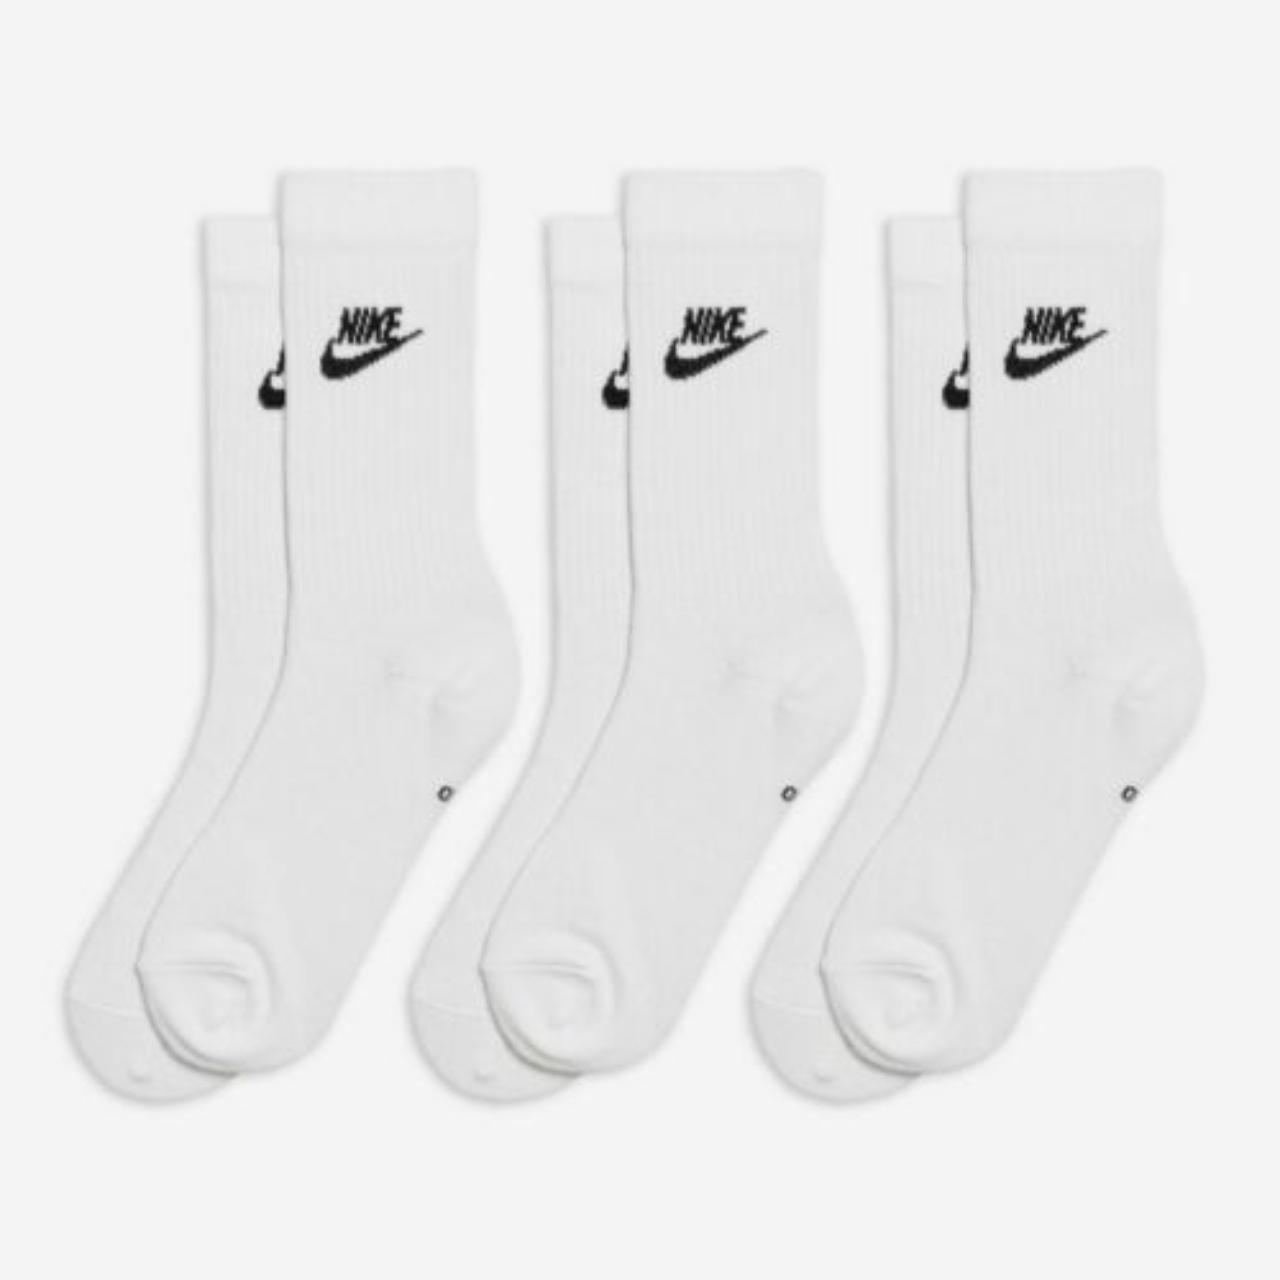 Nike socks - Depop